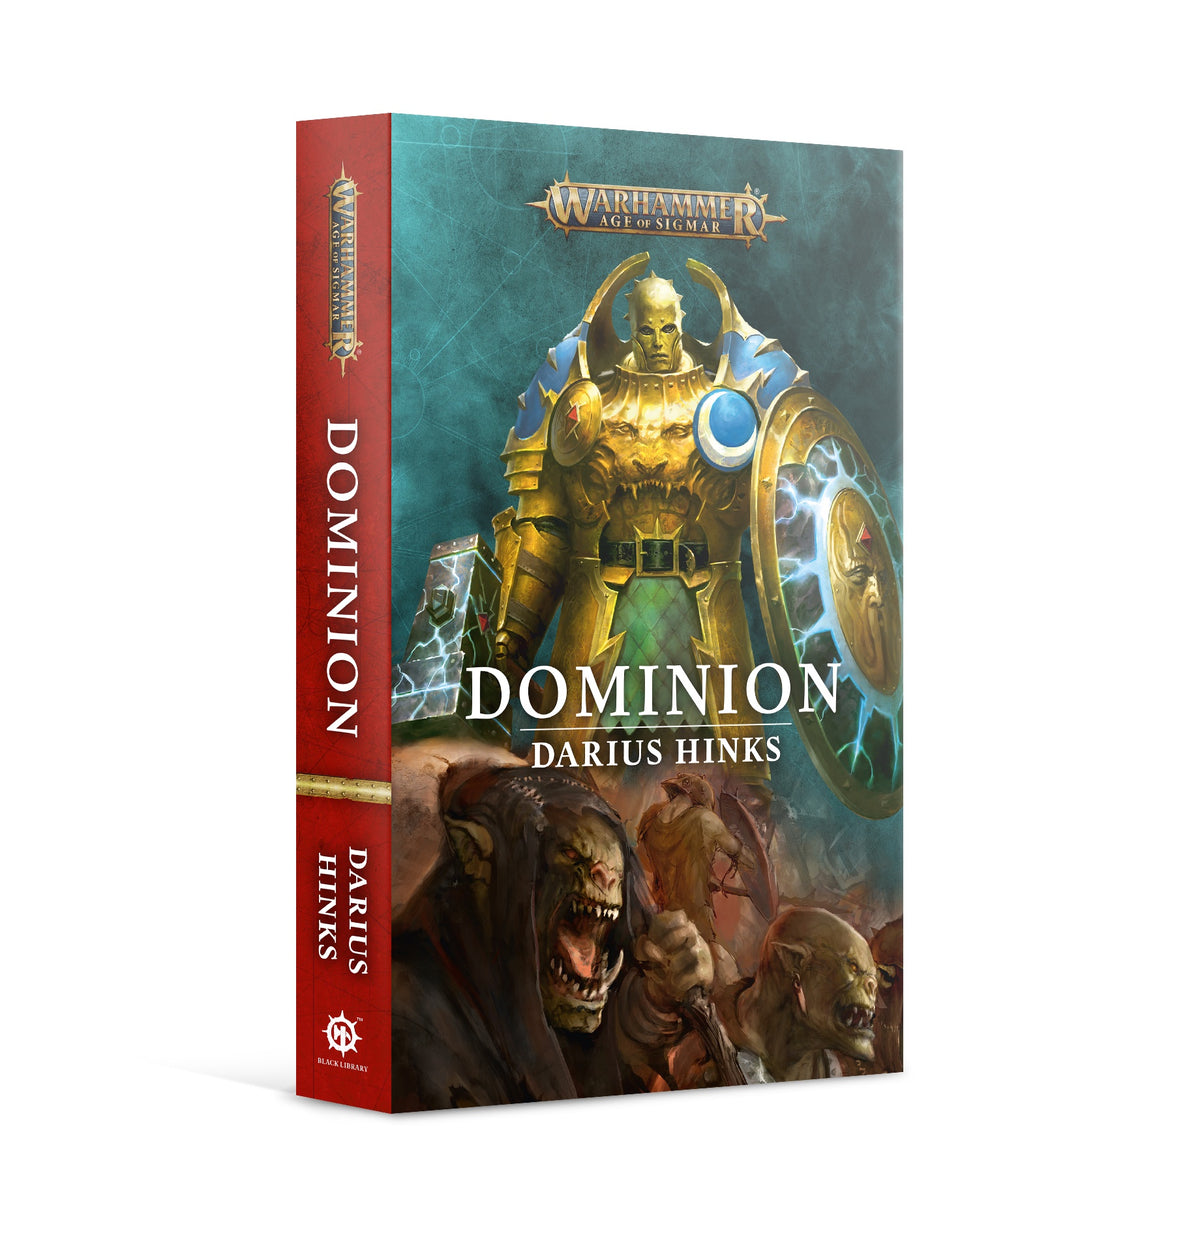 Dominion (Novel PB)